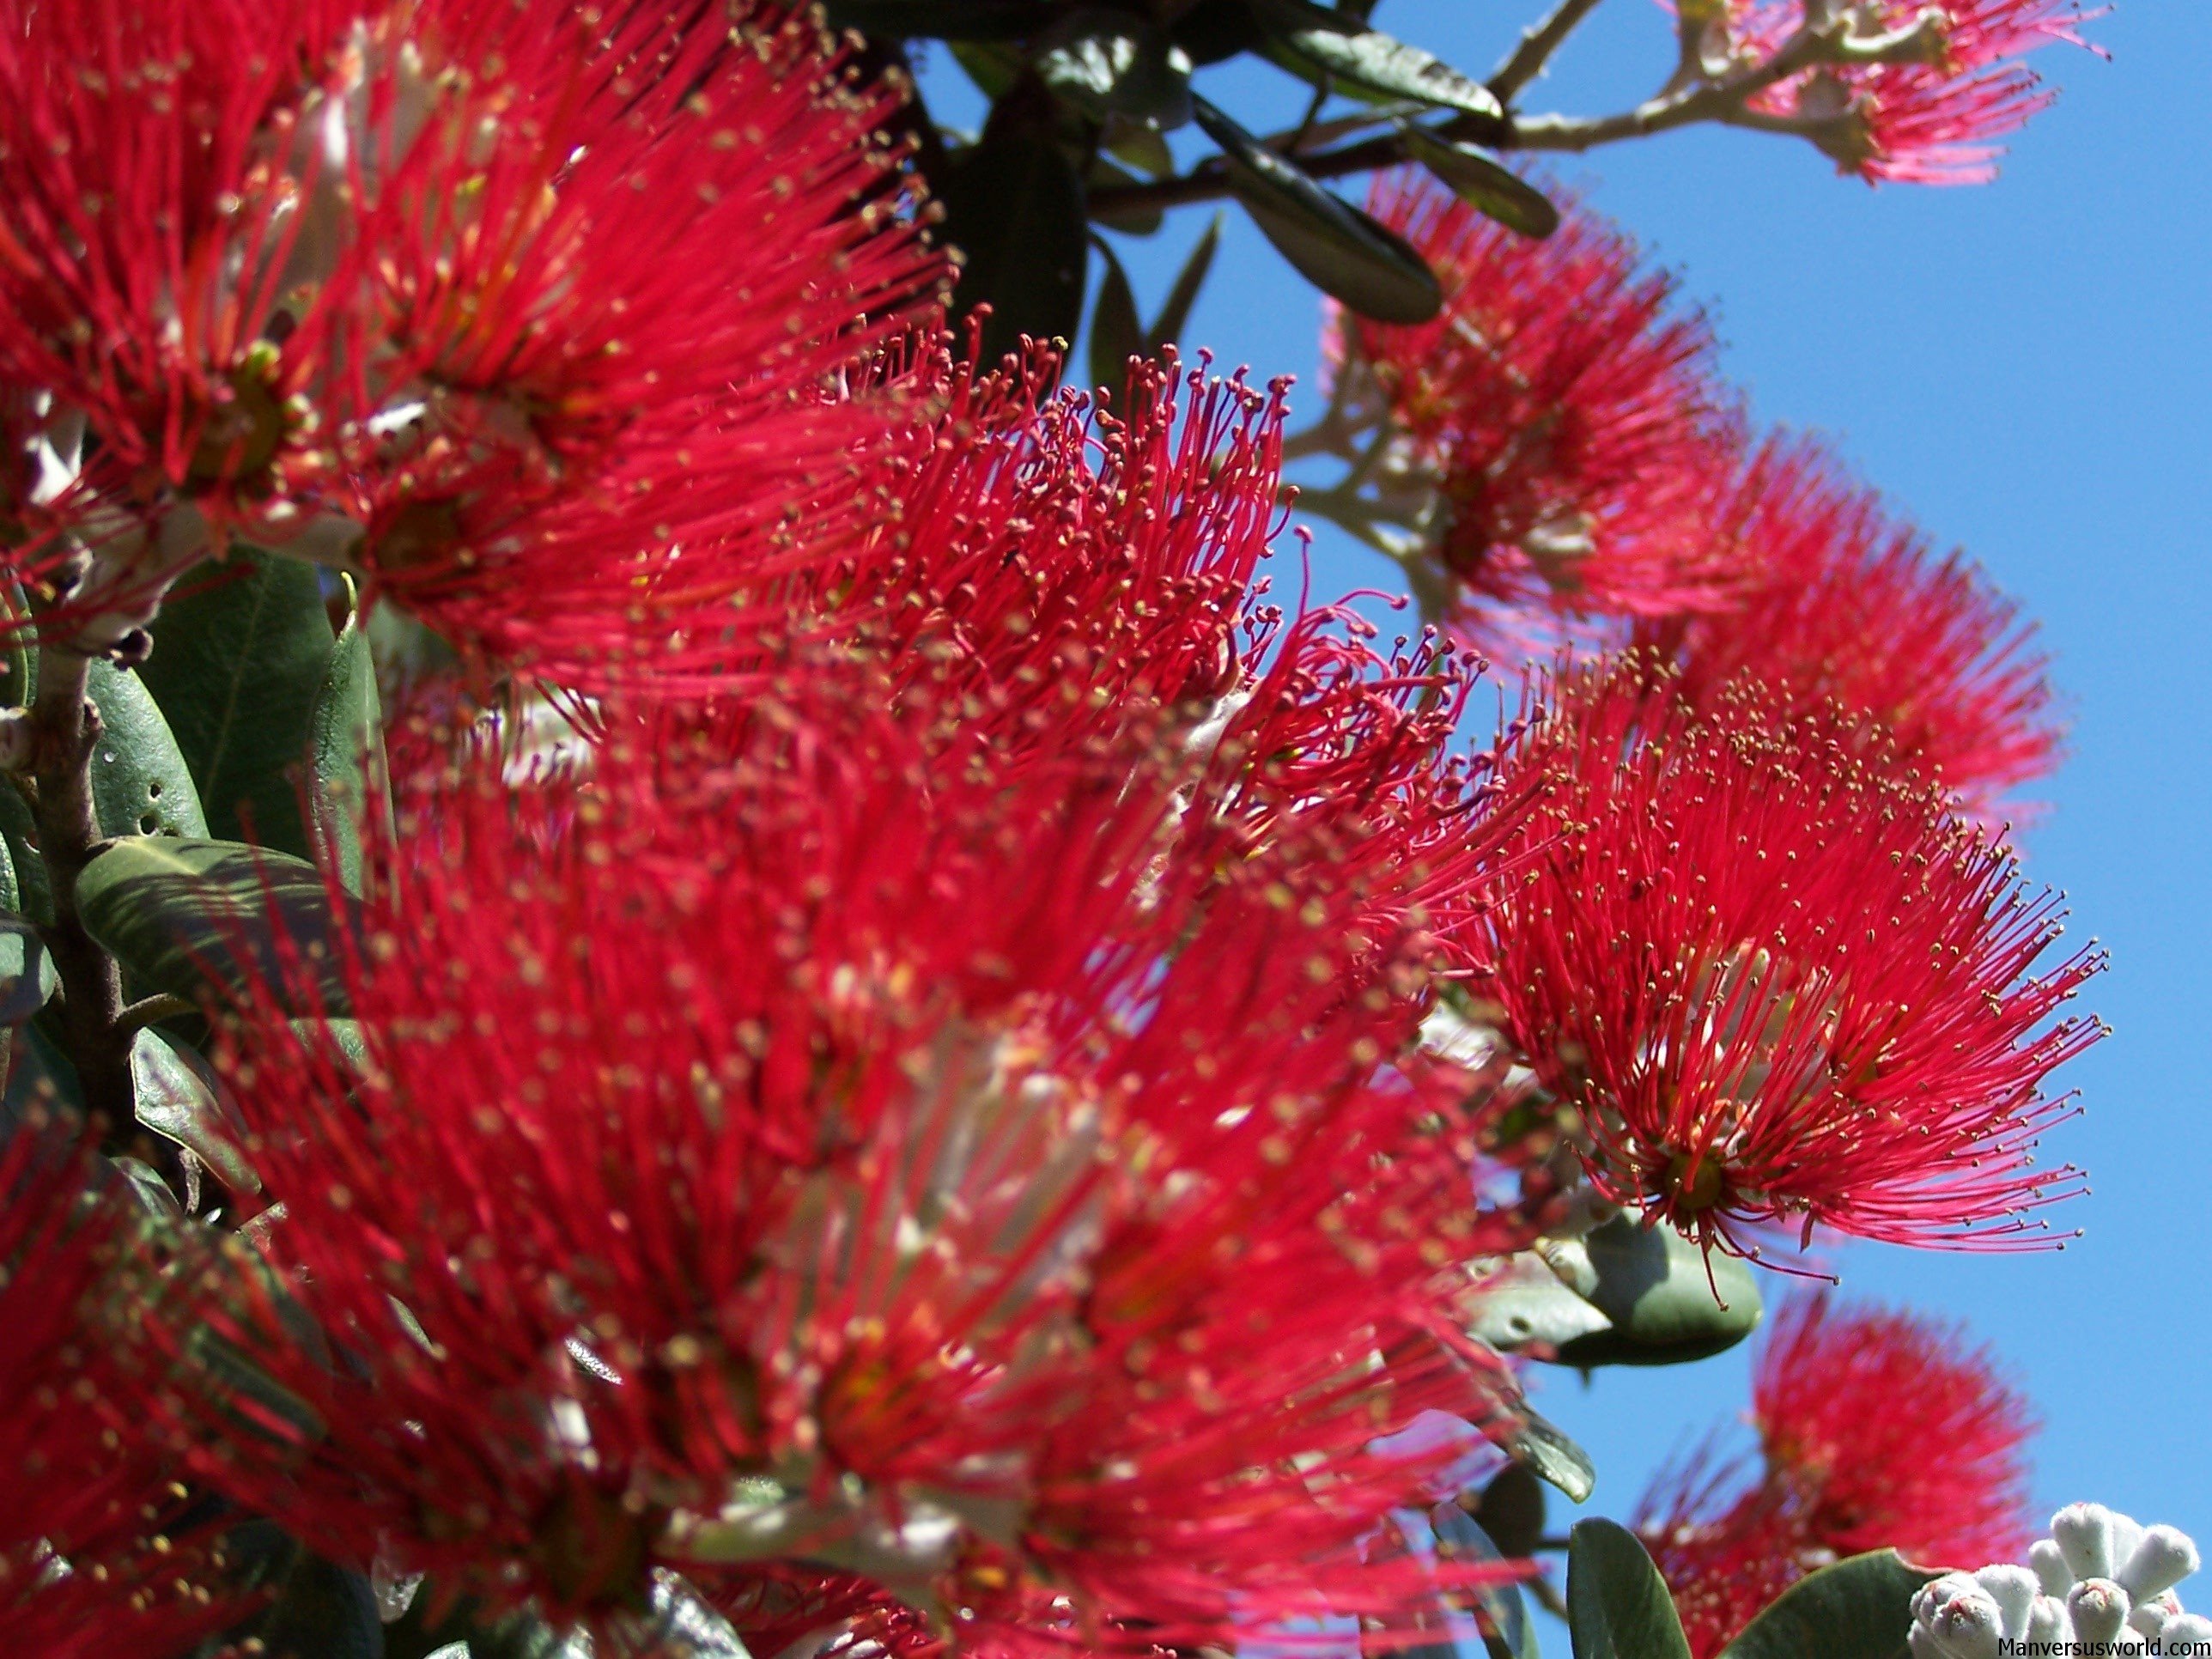 Pohutukawa - the New Zealand Christmas tree